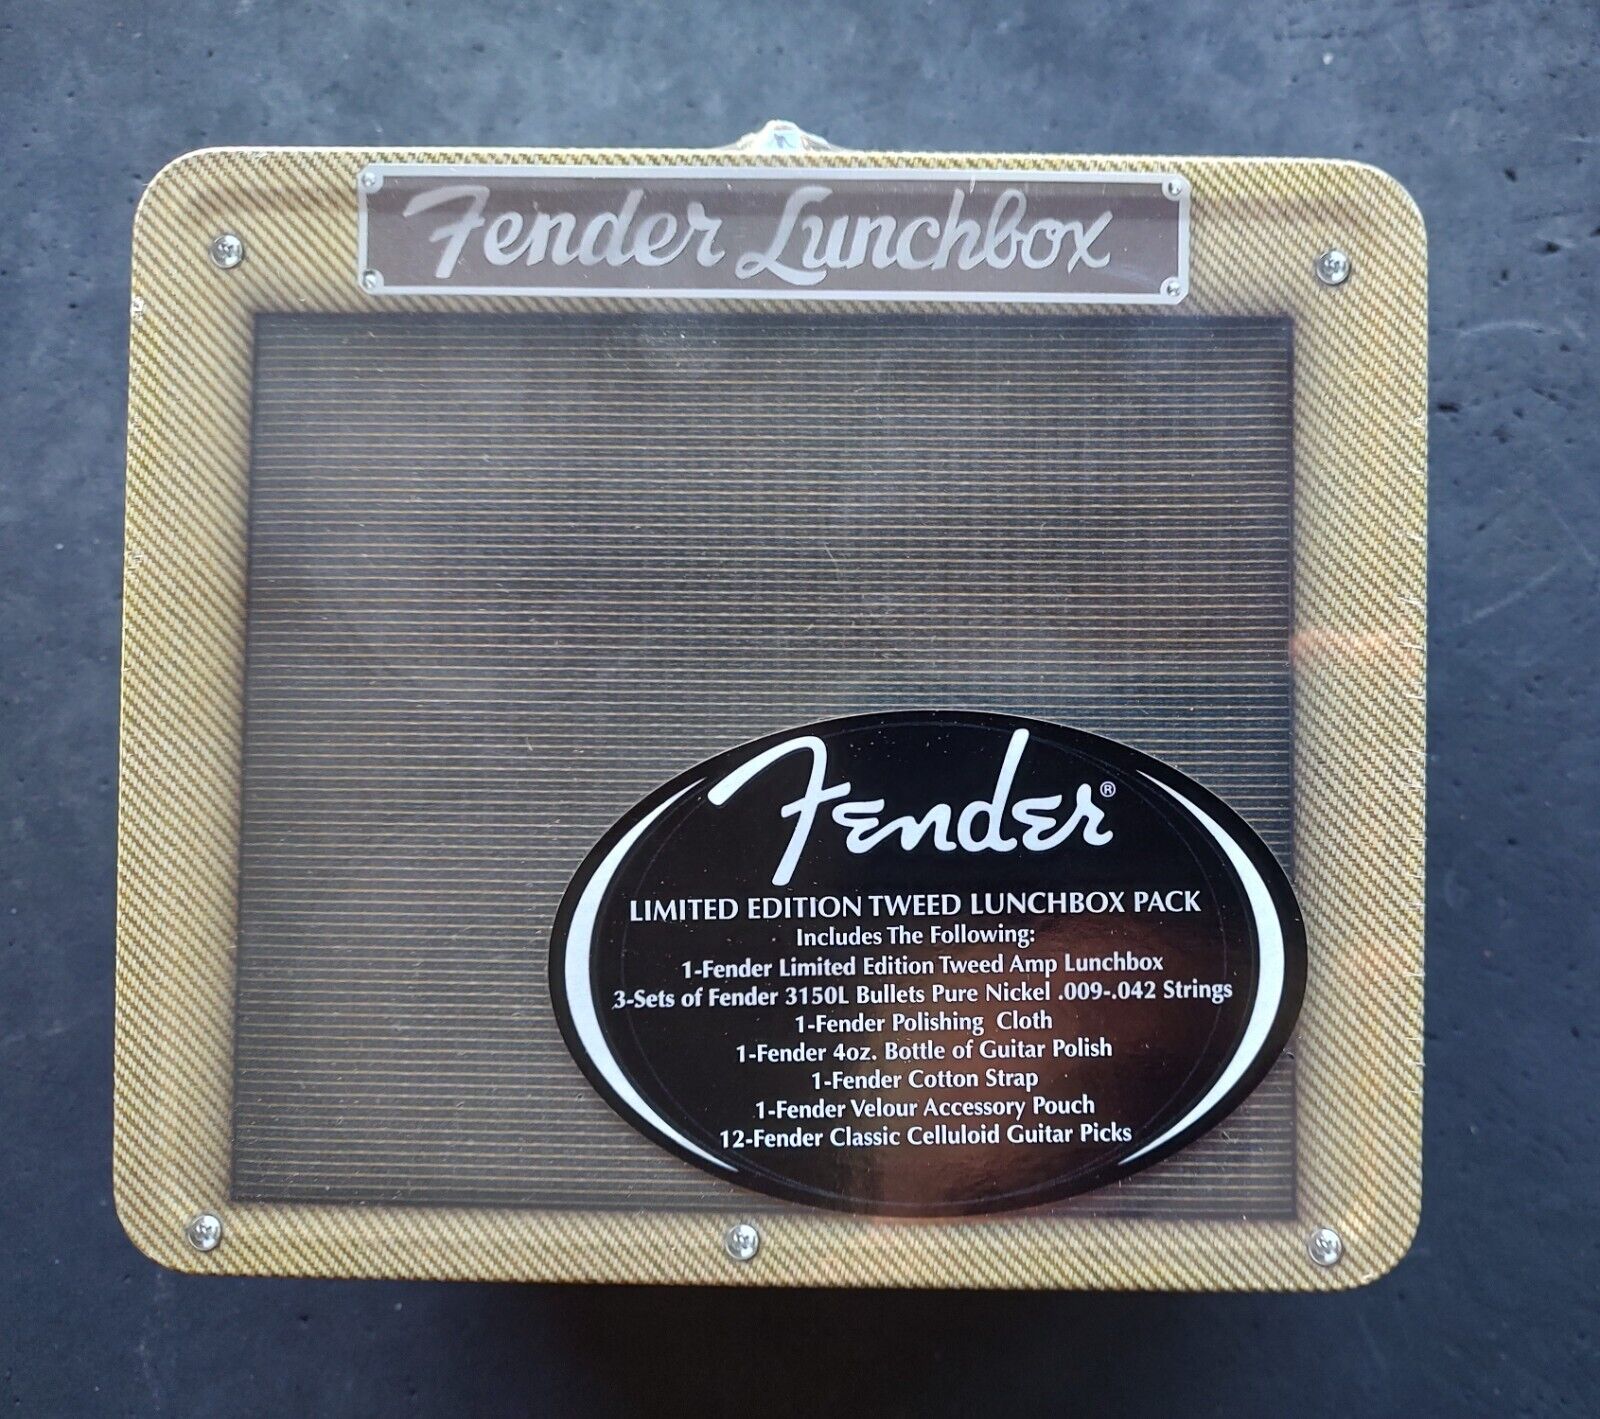 Limited Edition 2000 Fender Tweed Lunchbox Pack unopened original sealed xtras